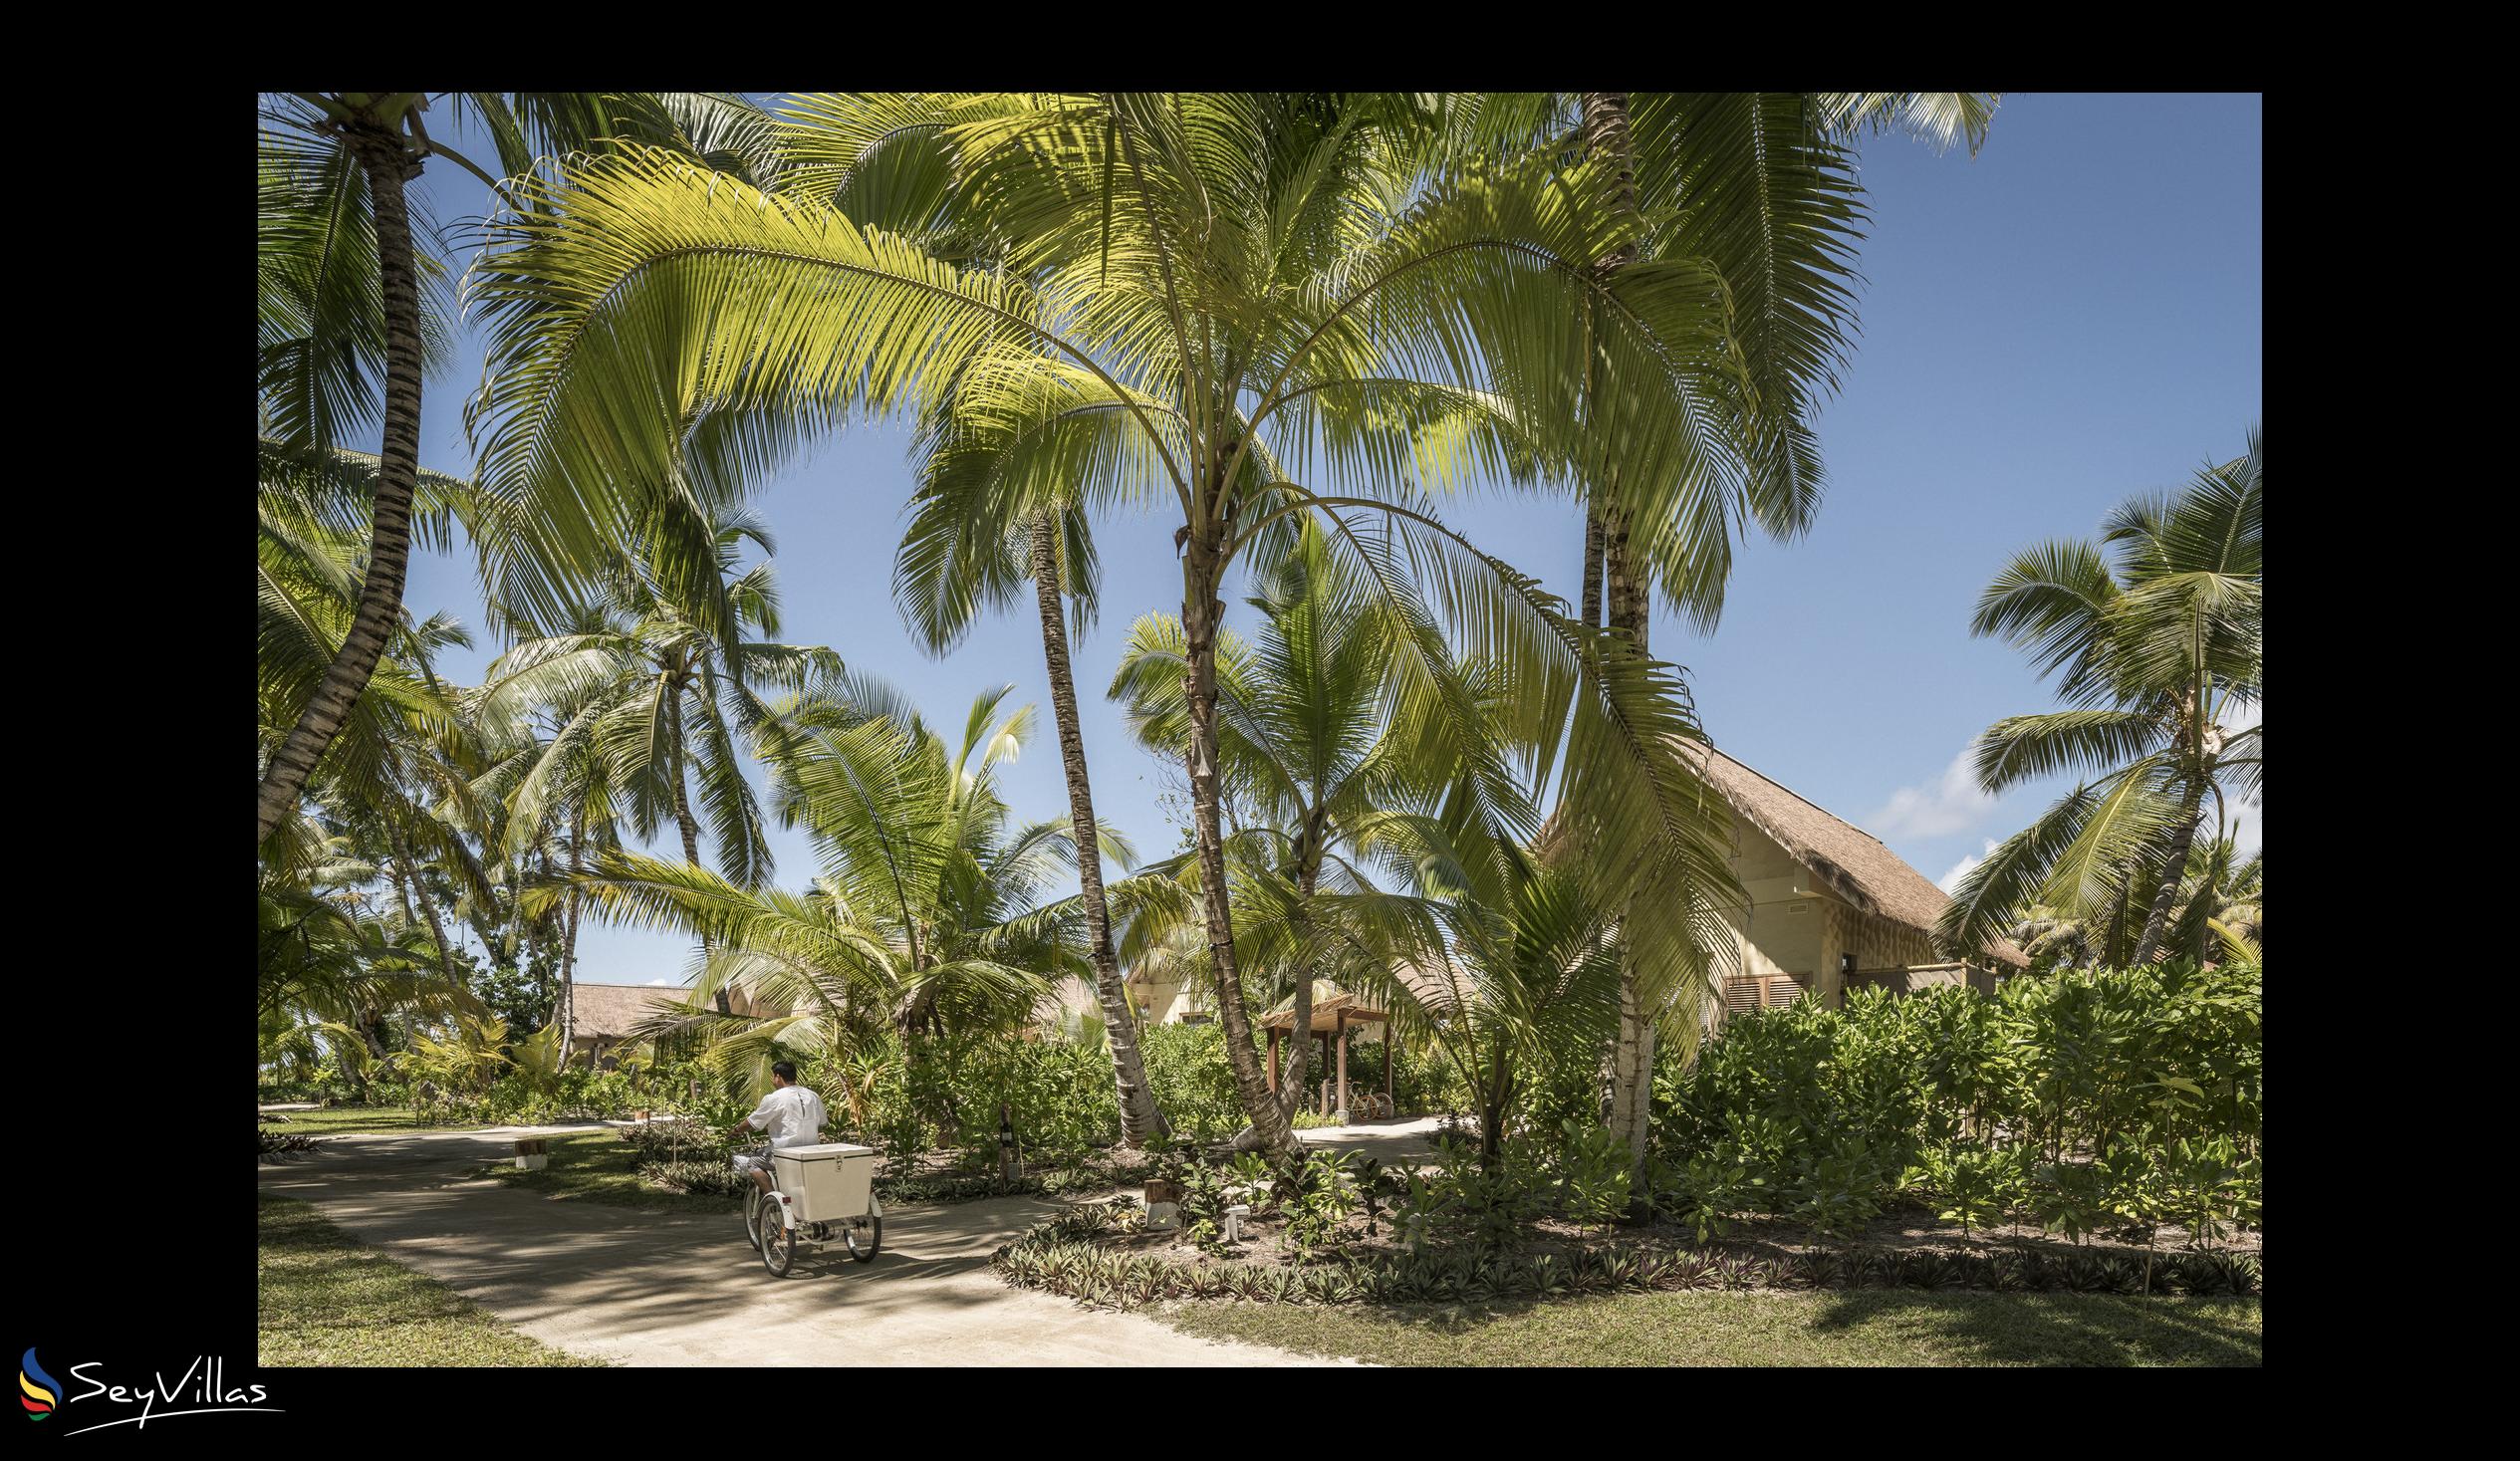 Foto 11: Four Seasons Resort Desroches Island - Aussenbereich - Desroches Island (Seychellen)